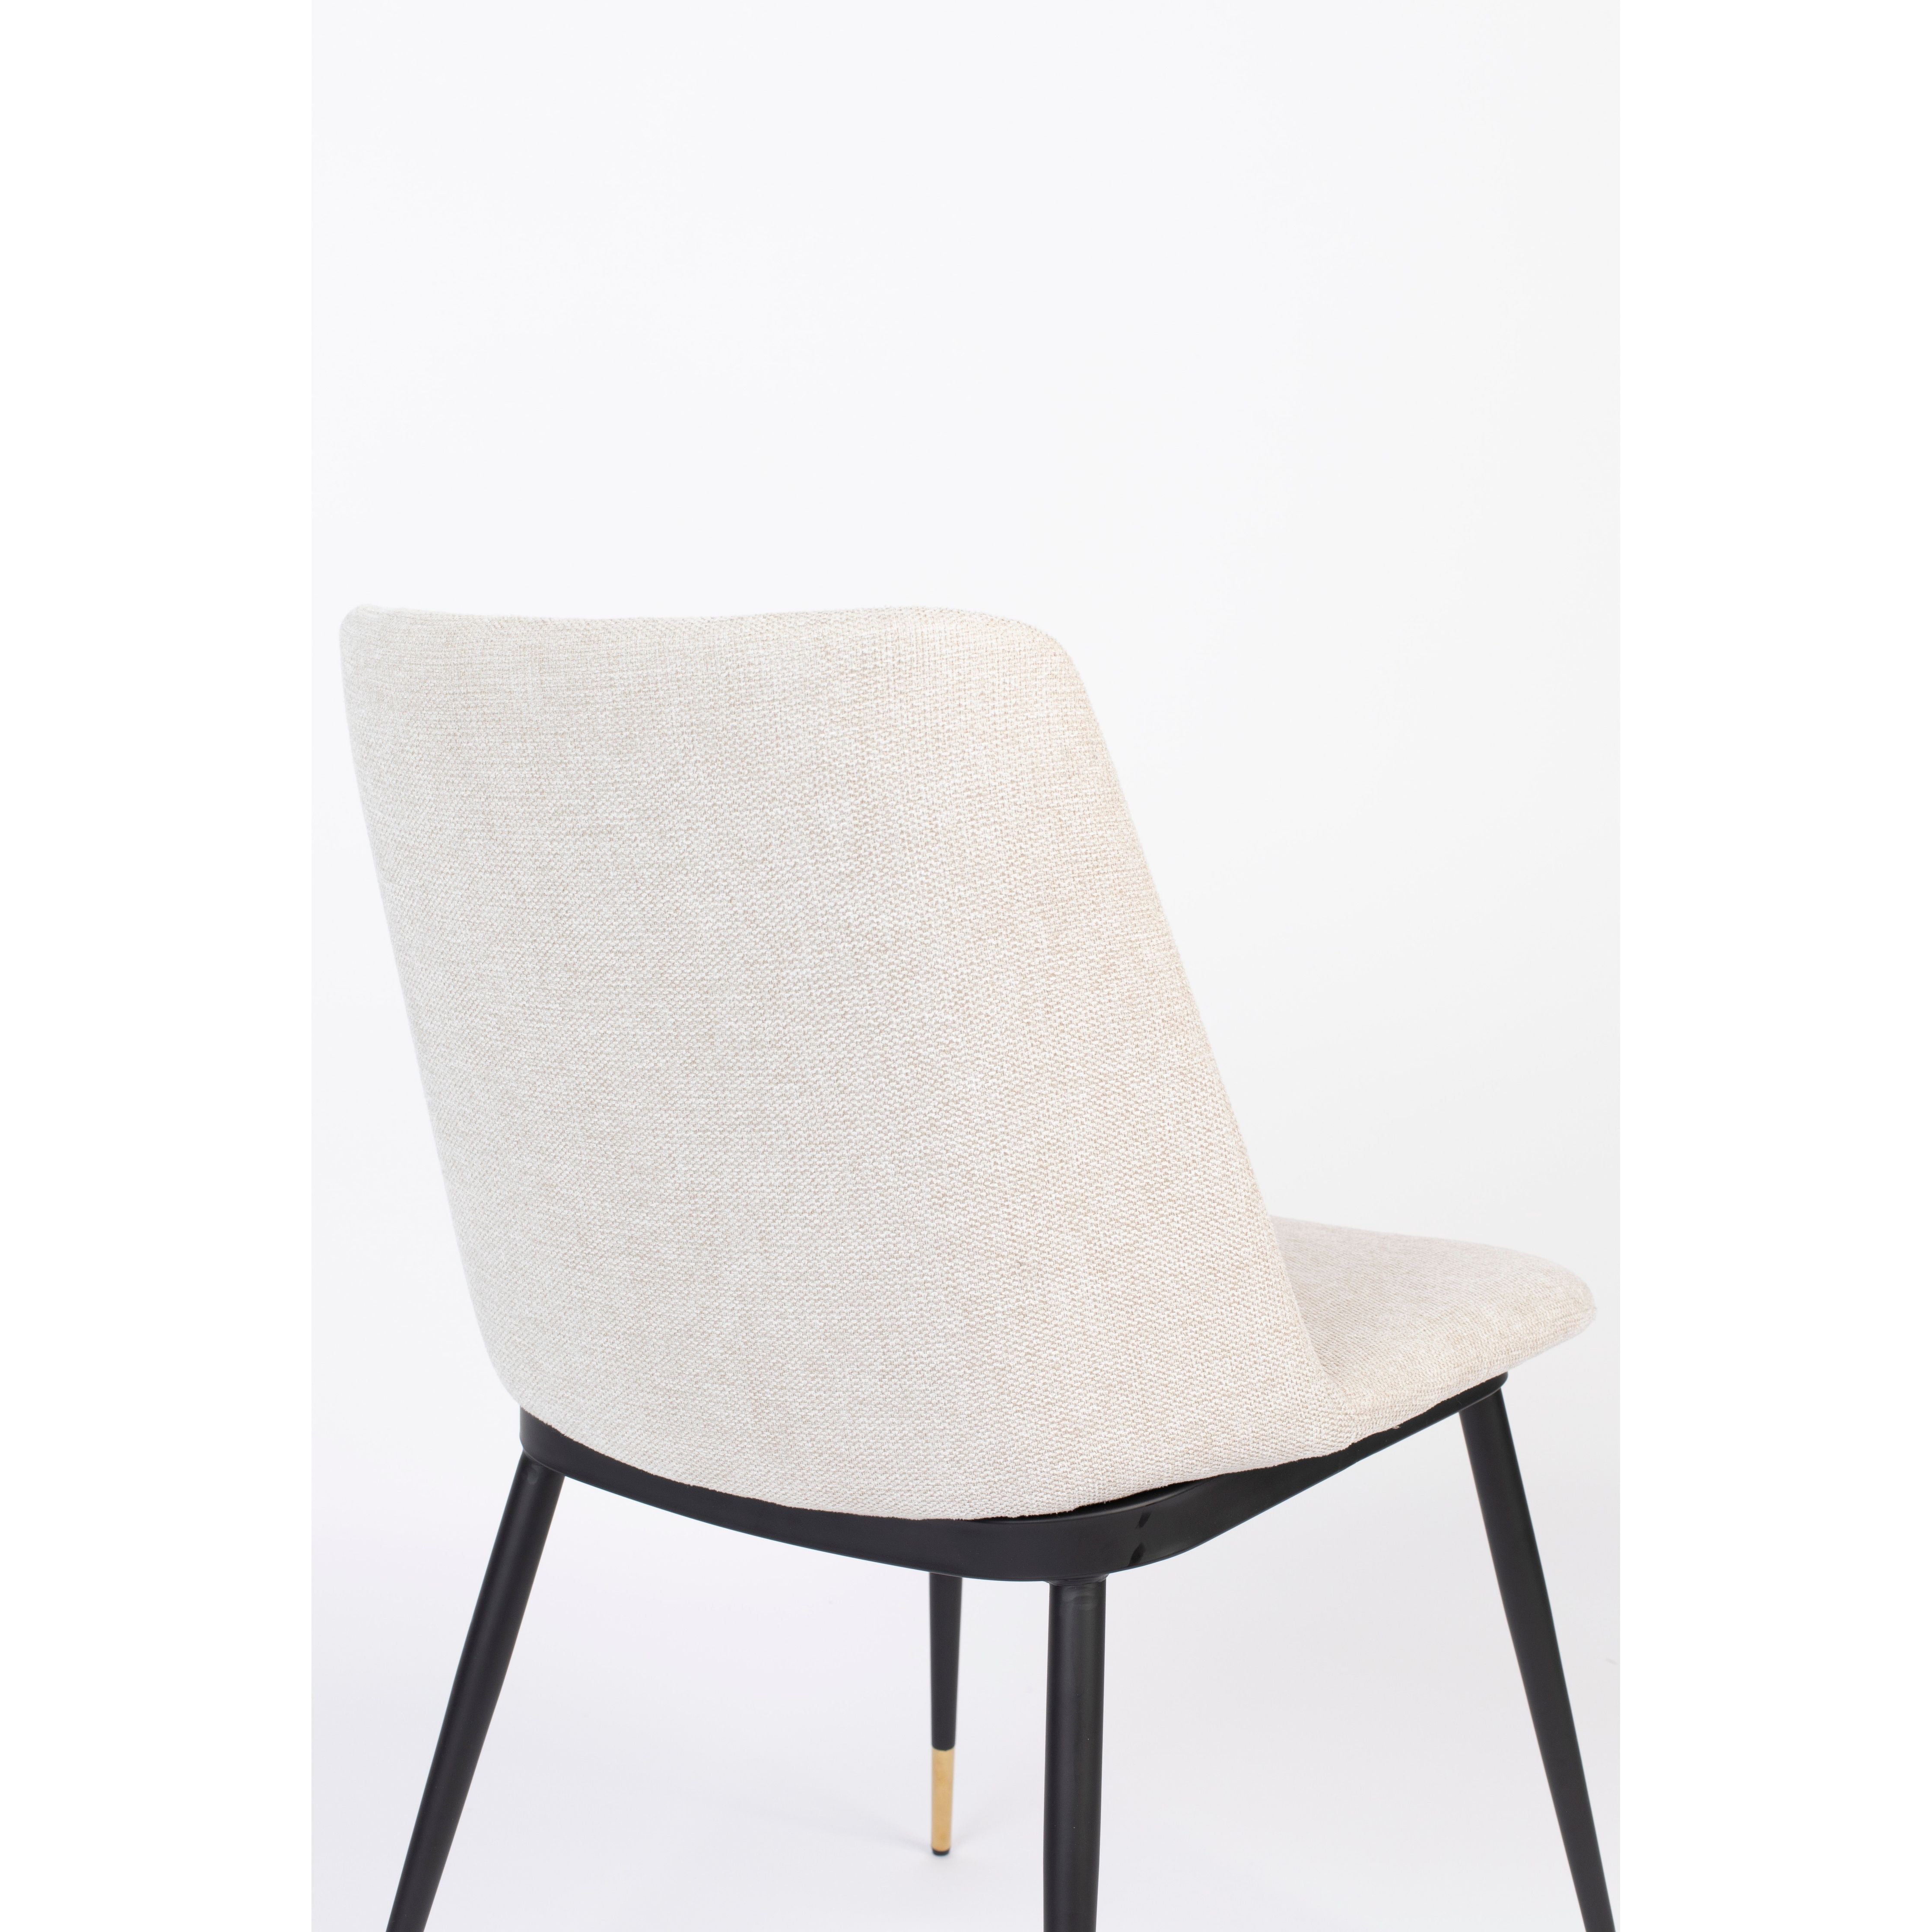 Chair lionel beige fr | 2 pieces